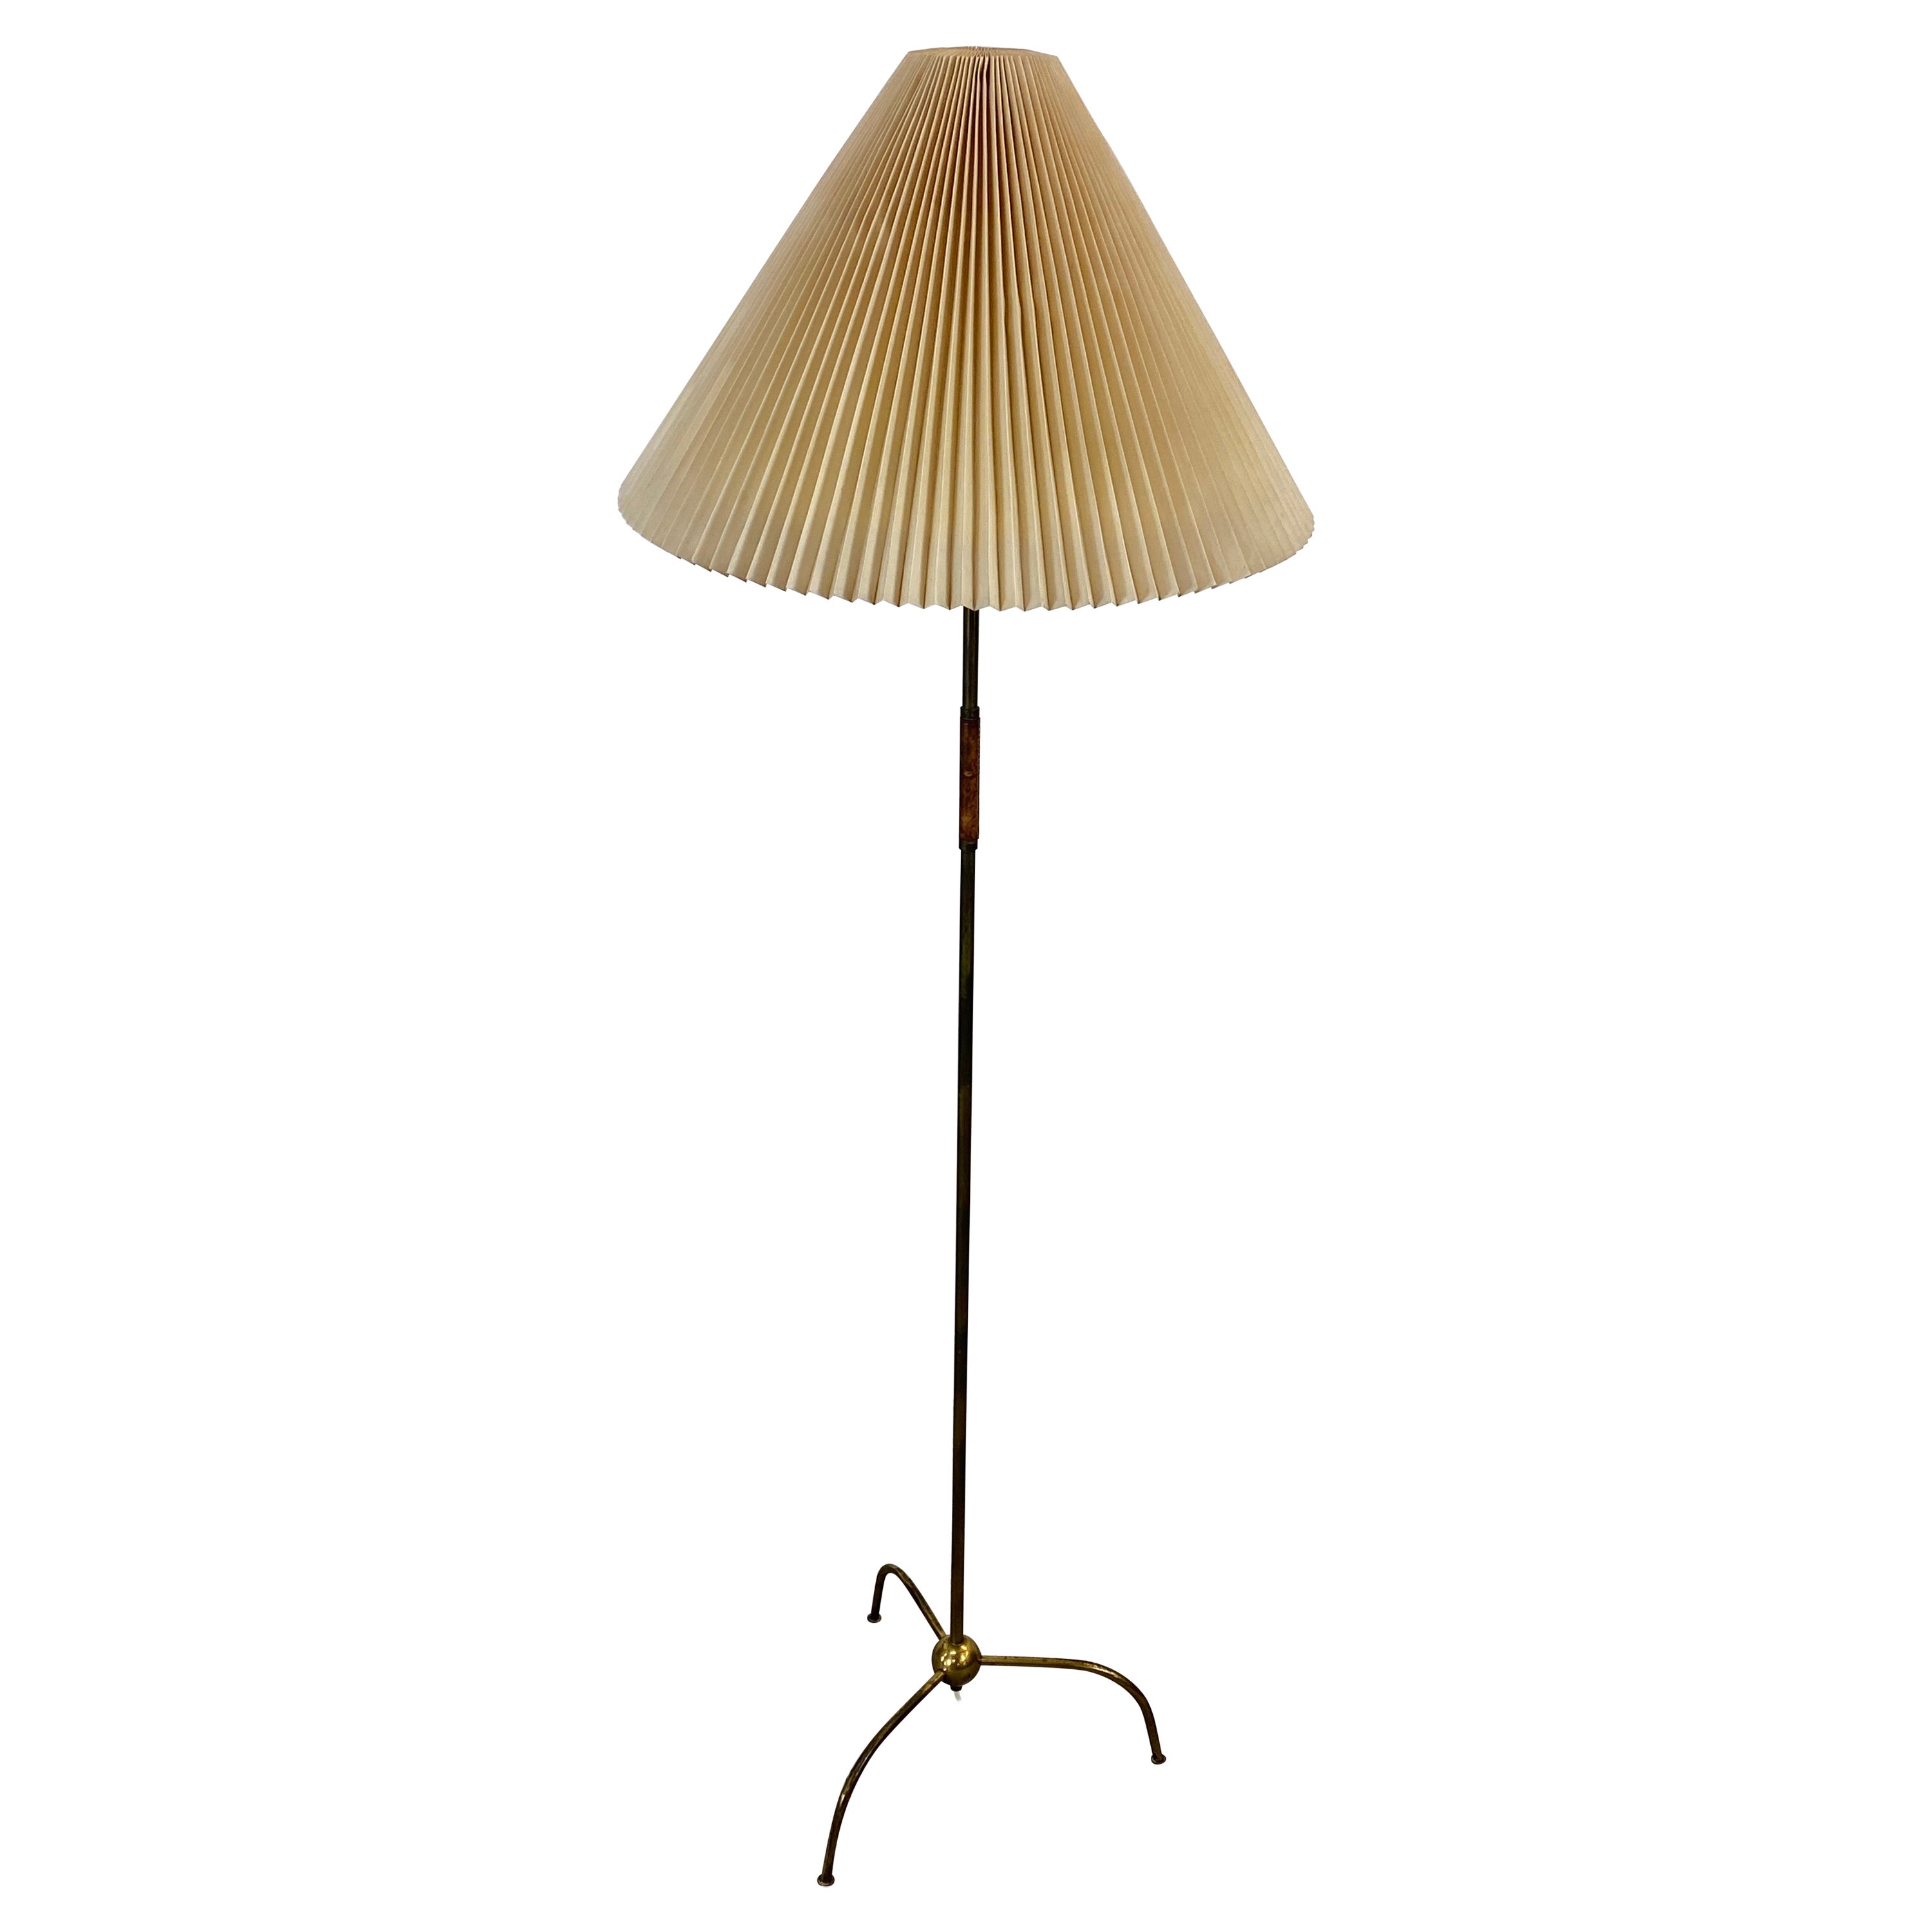 Tripod Midcentury Floor Brass lamp from Josef Frank by Kalmar, Austria 1940s